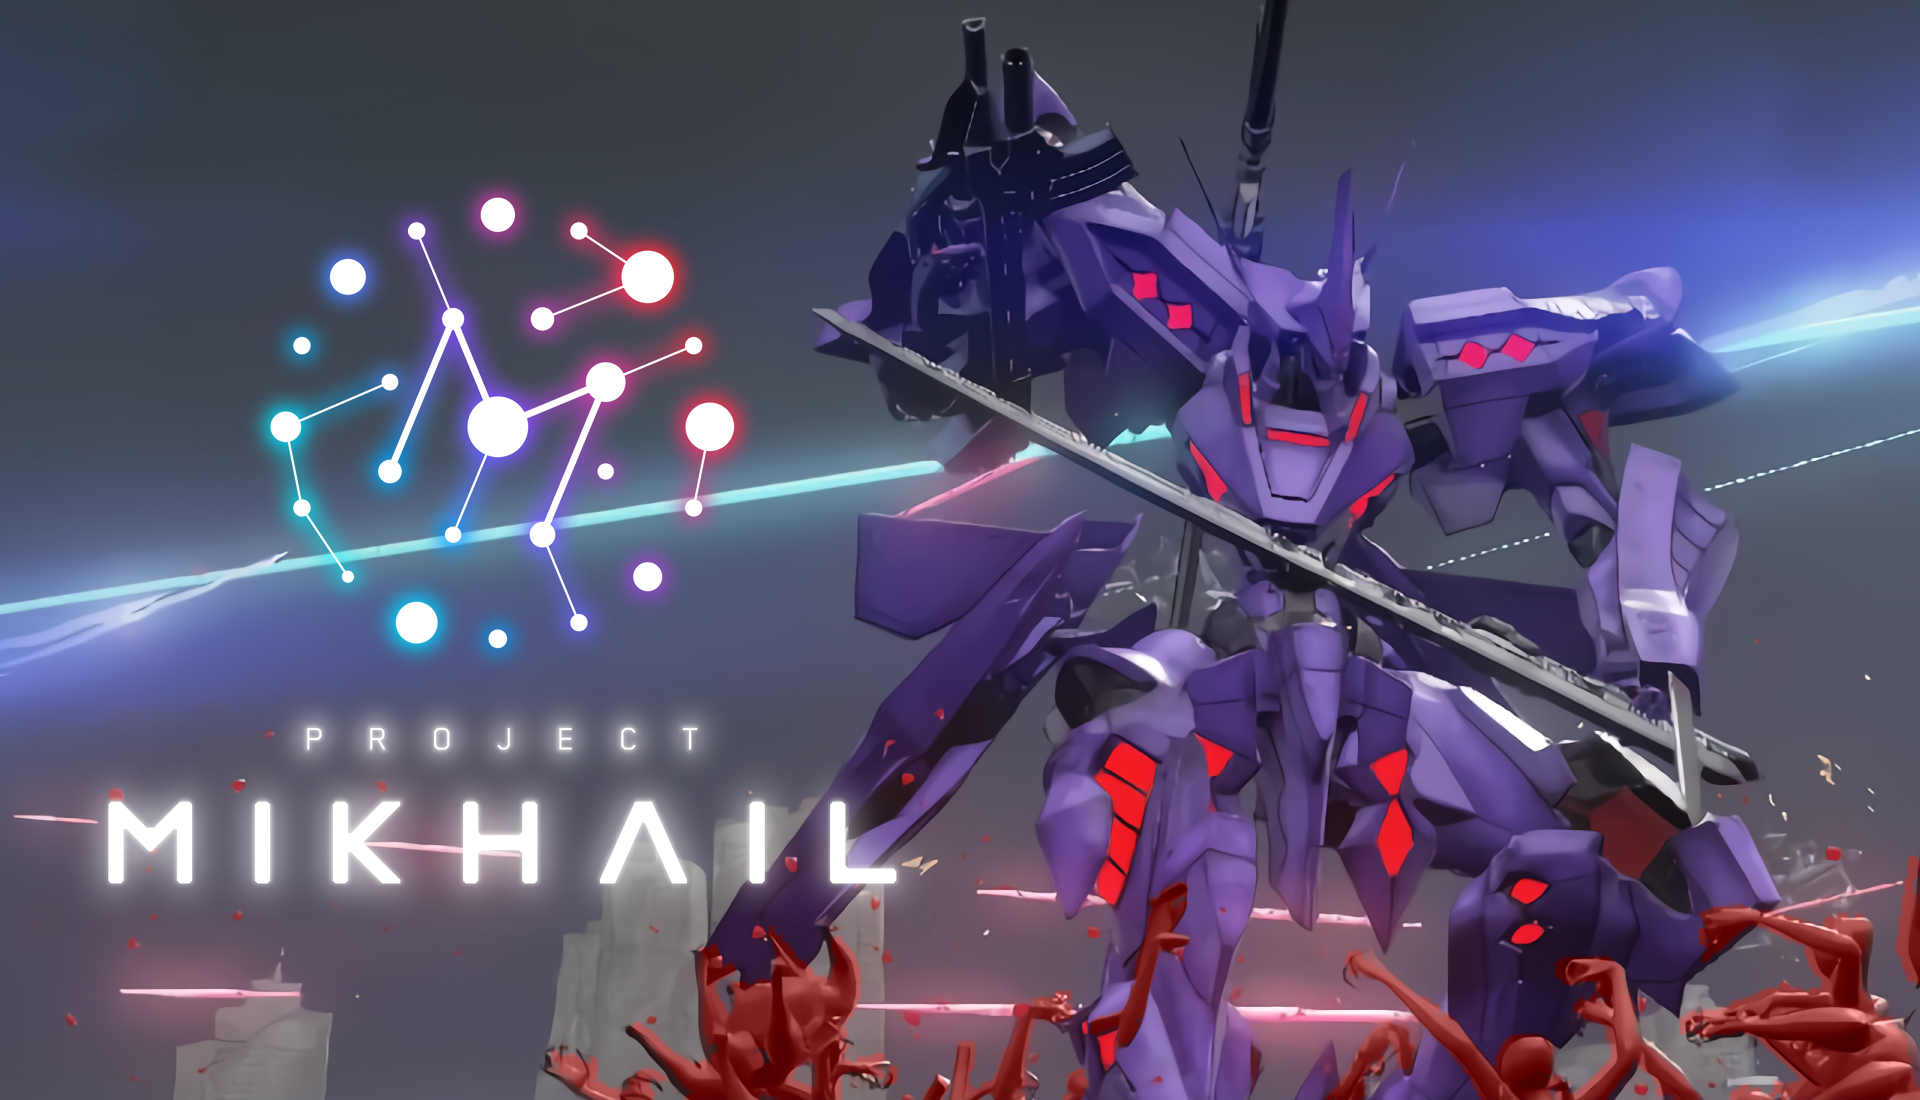 『Project MIKHAIL』Steamストアページ・トレーラー映像公開！